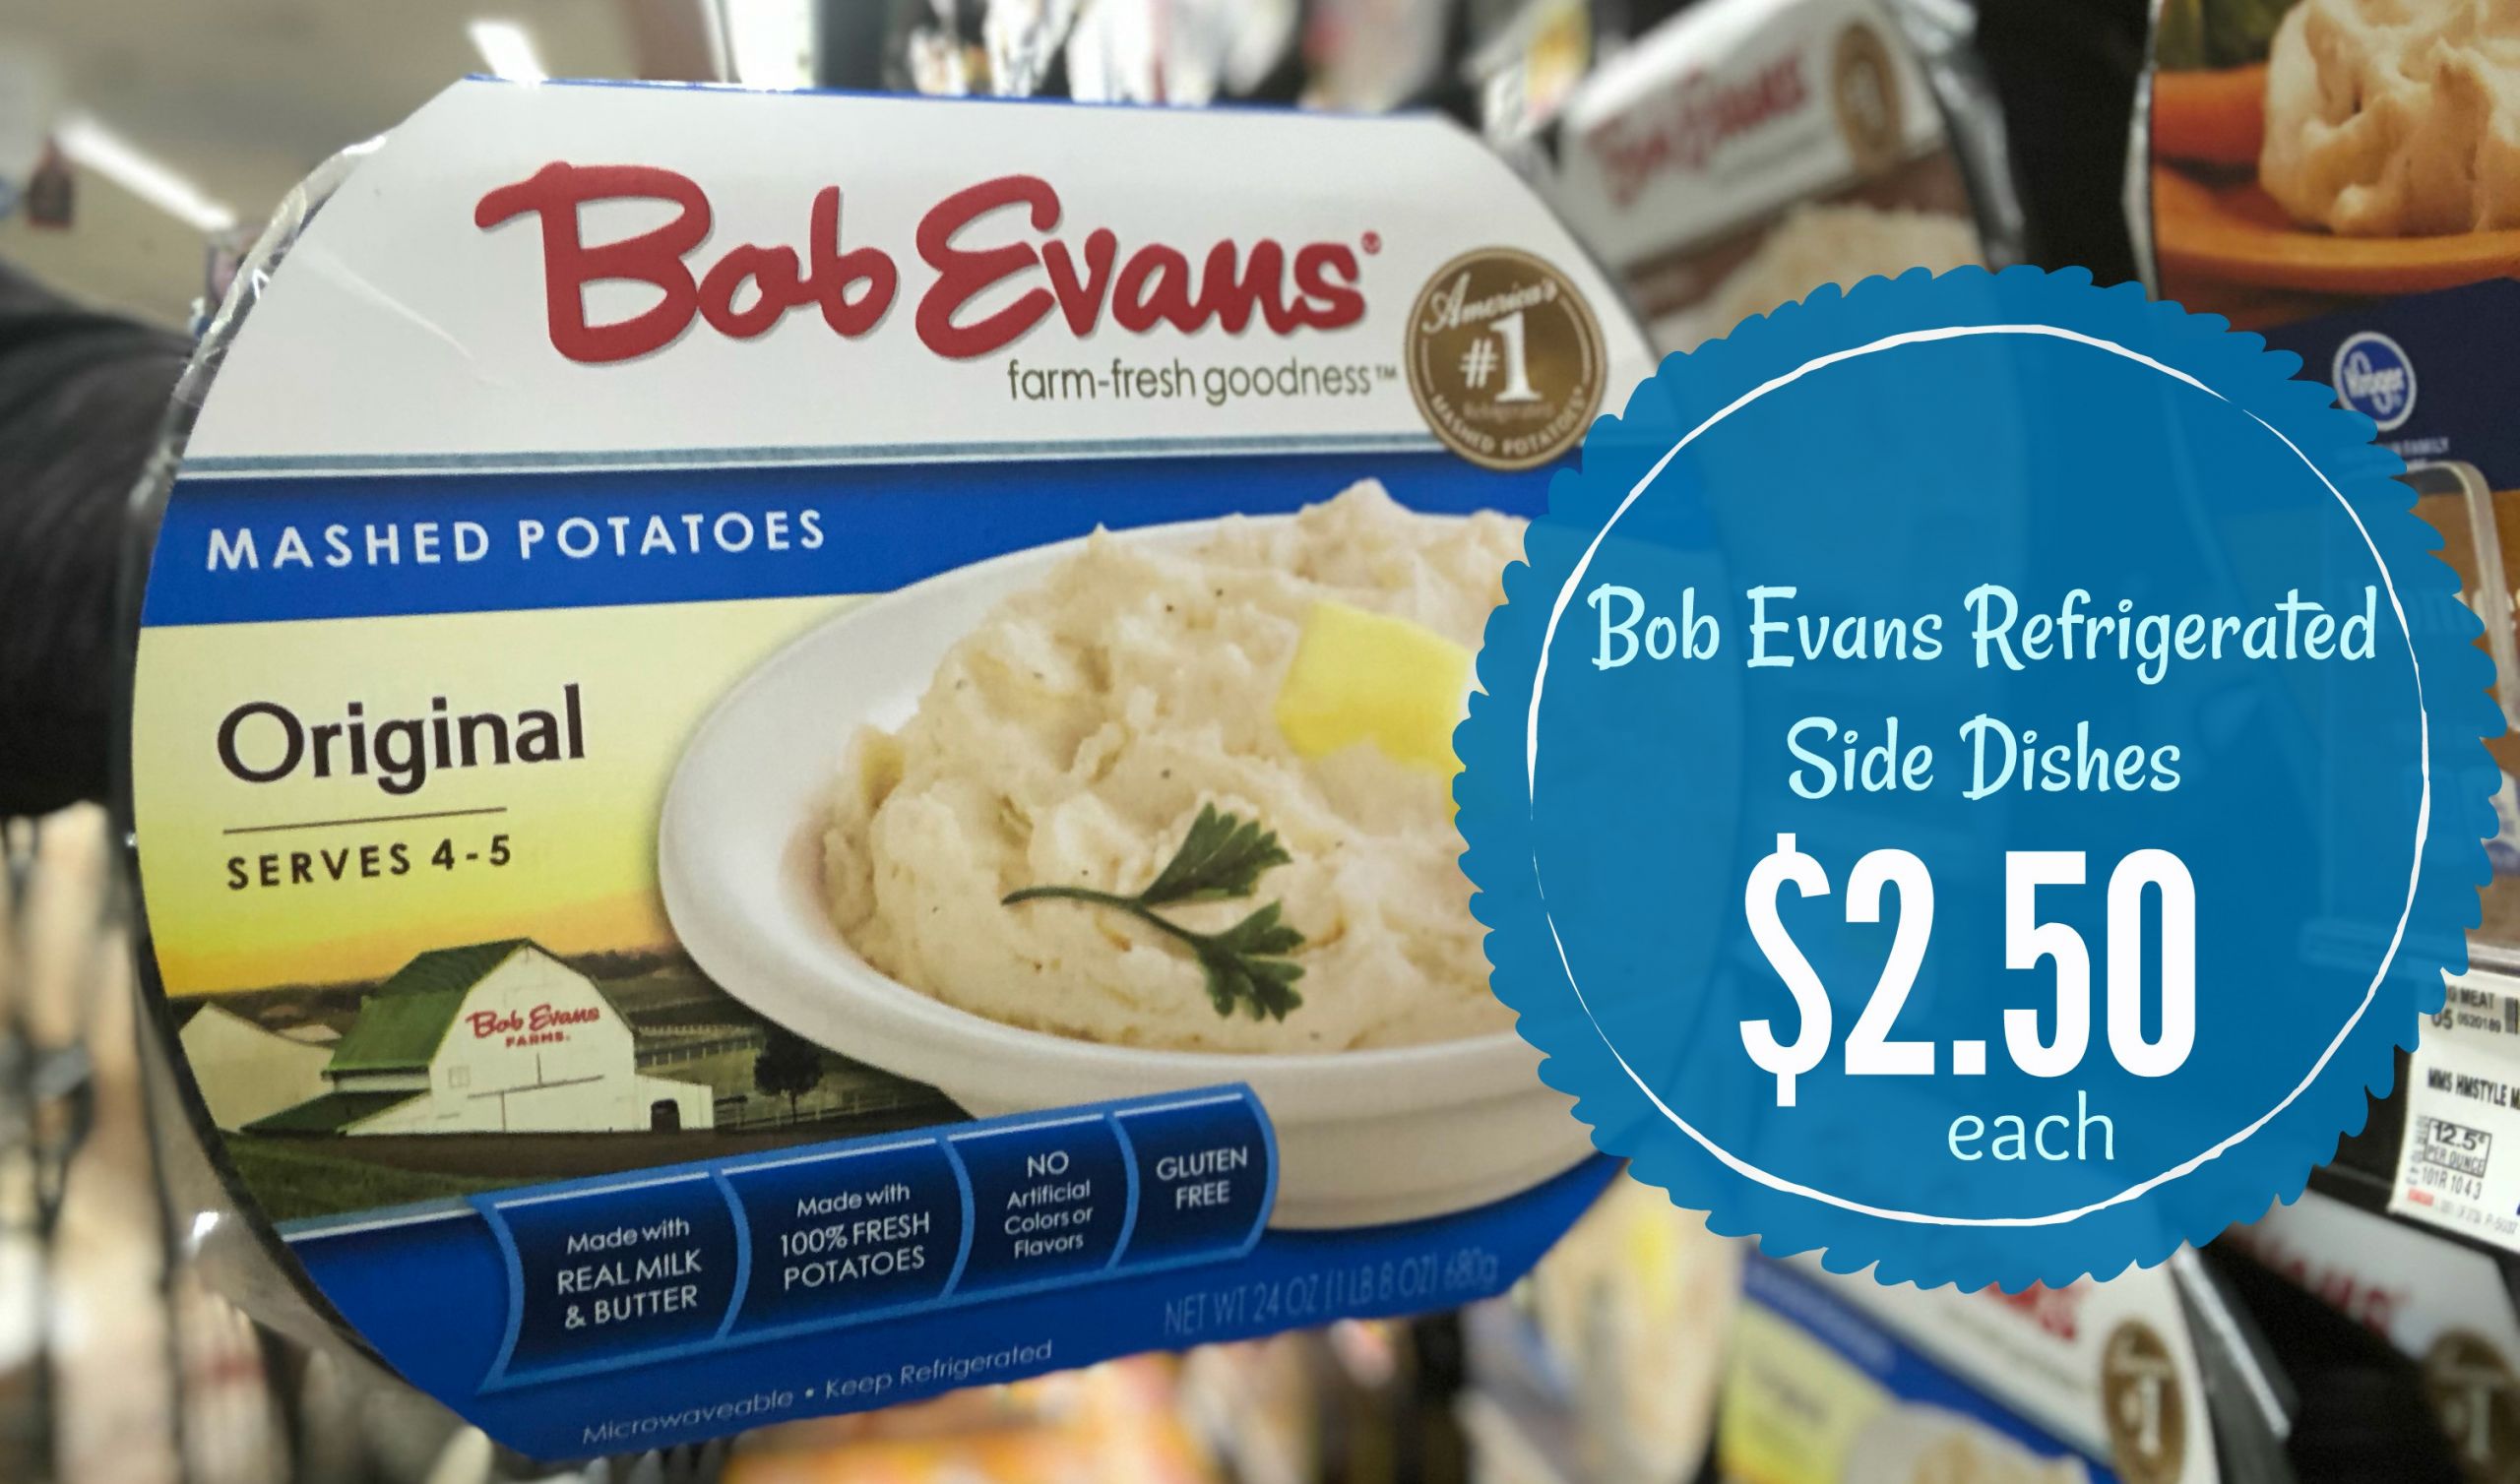 Bob Evans Refrigerated Side Dishes
 Bob Evans Refrigerated Side Dishes JUST $2 50 each at